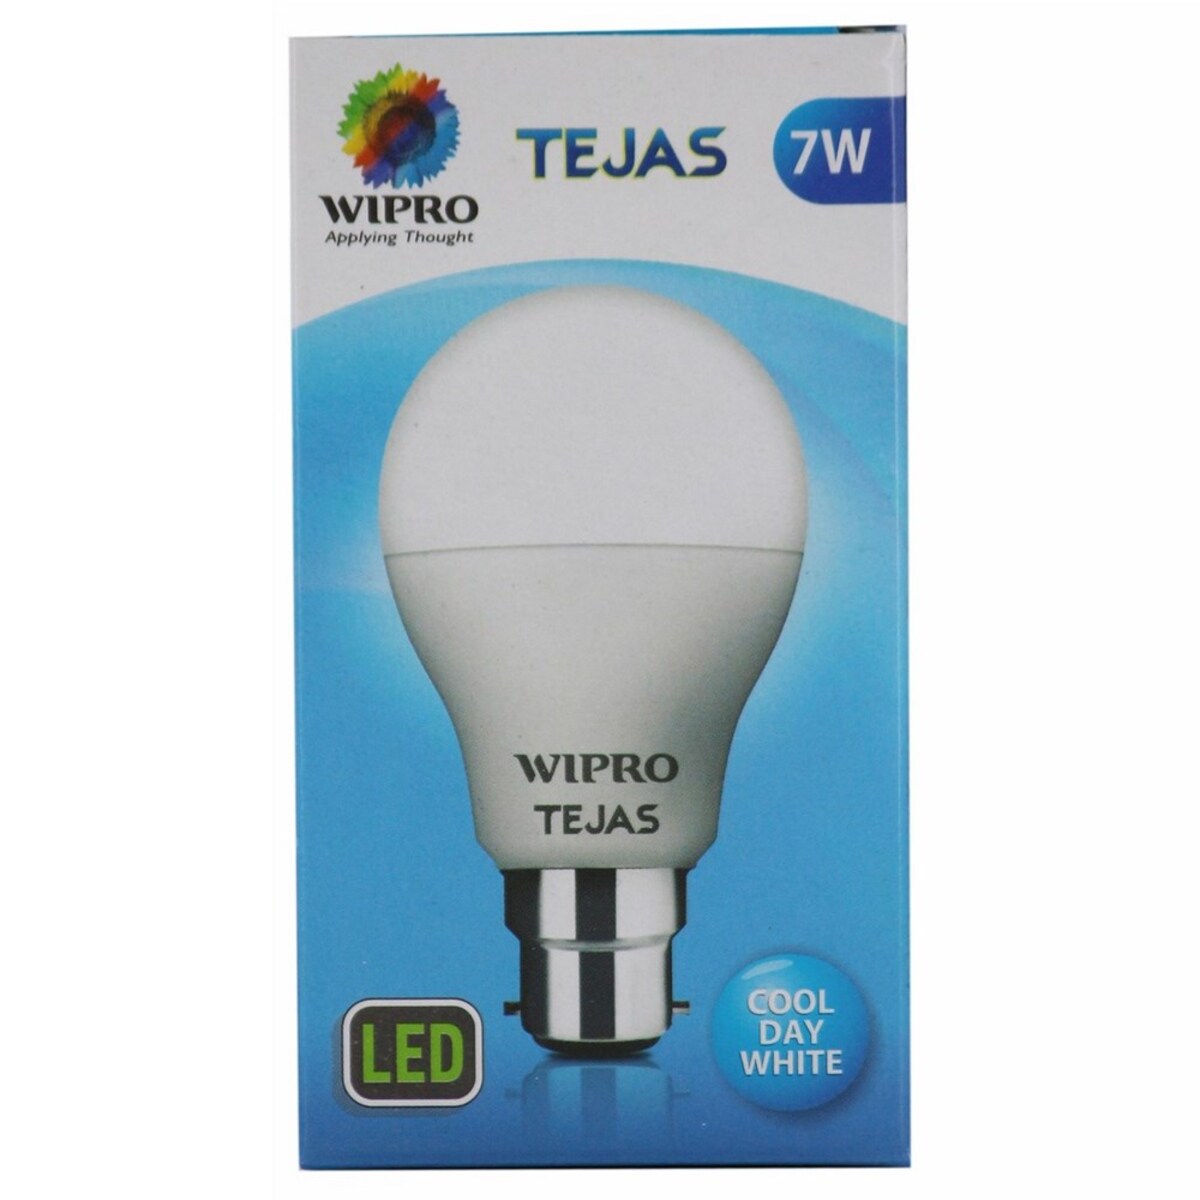 Wipro LED Bulb Tejas 7W